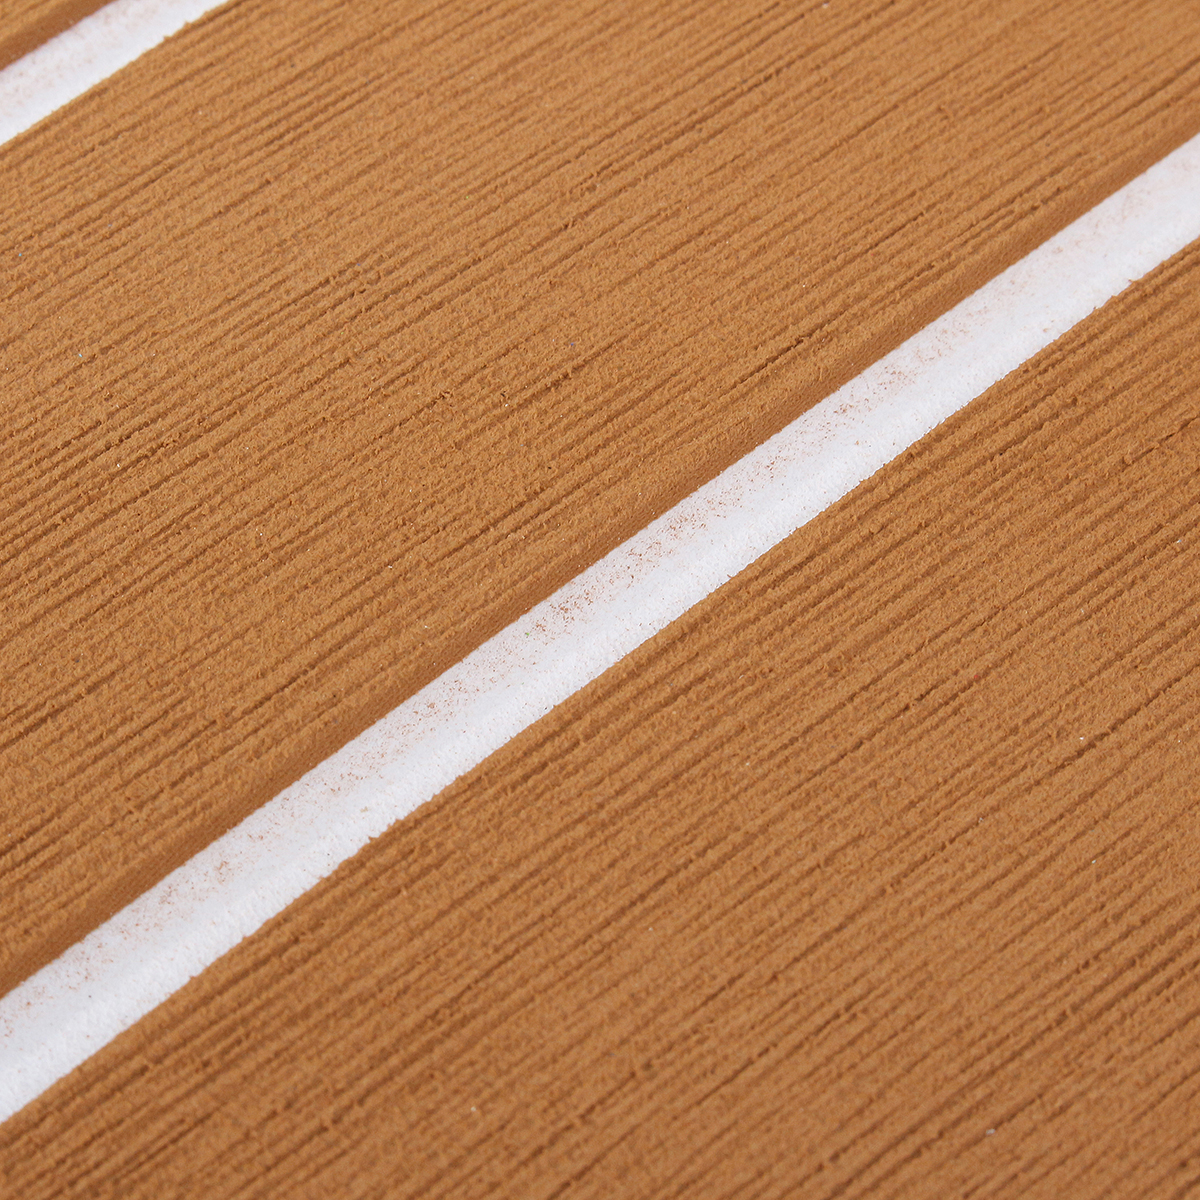 Brown-and-White-Striped-EVA-Imitation-Foam-Teak-Luxury-for-Boat-Deck-Rrailer-Cork-Plastic-Wood-Floor-1133190-3